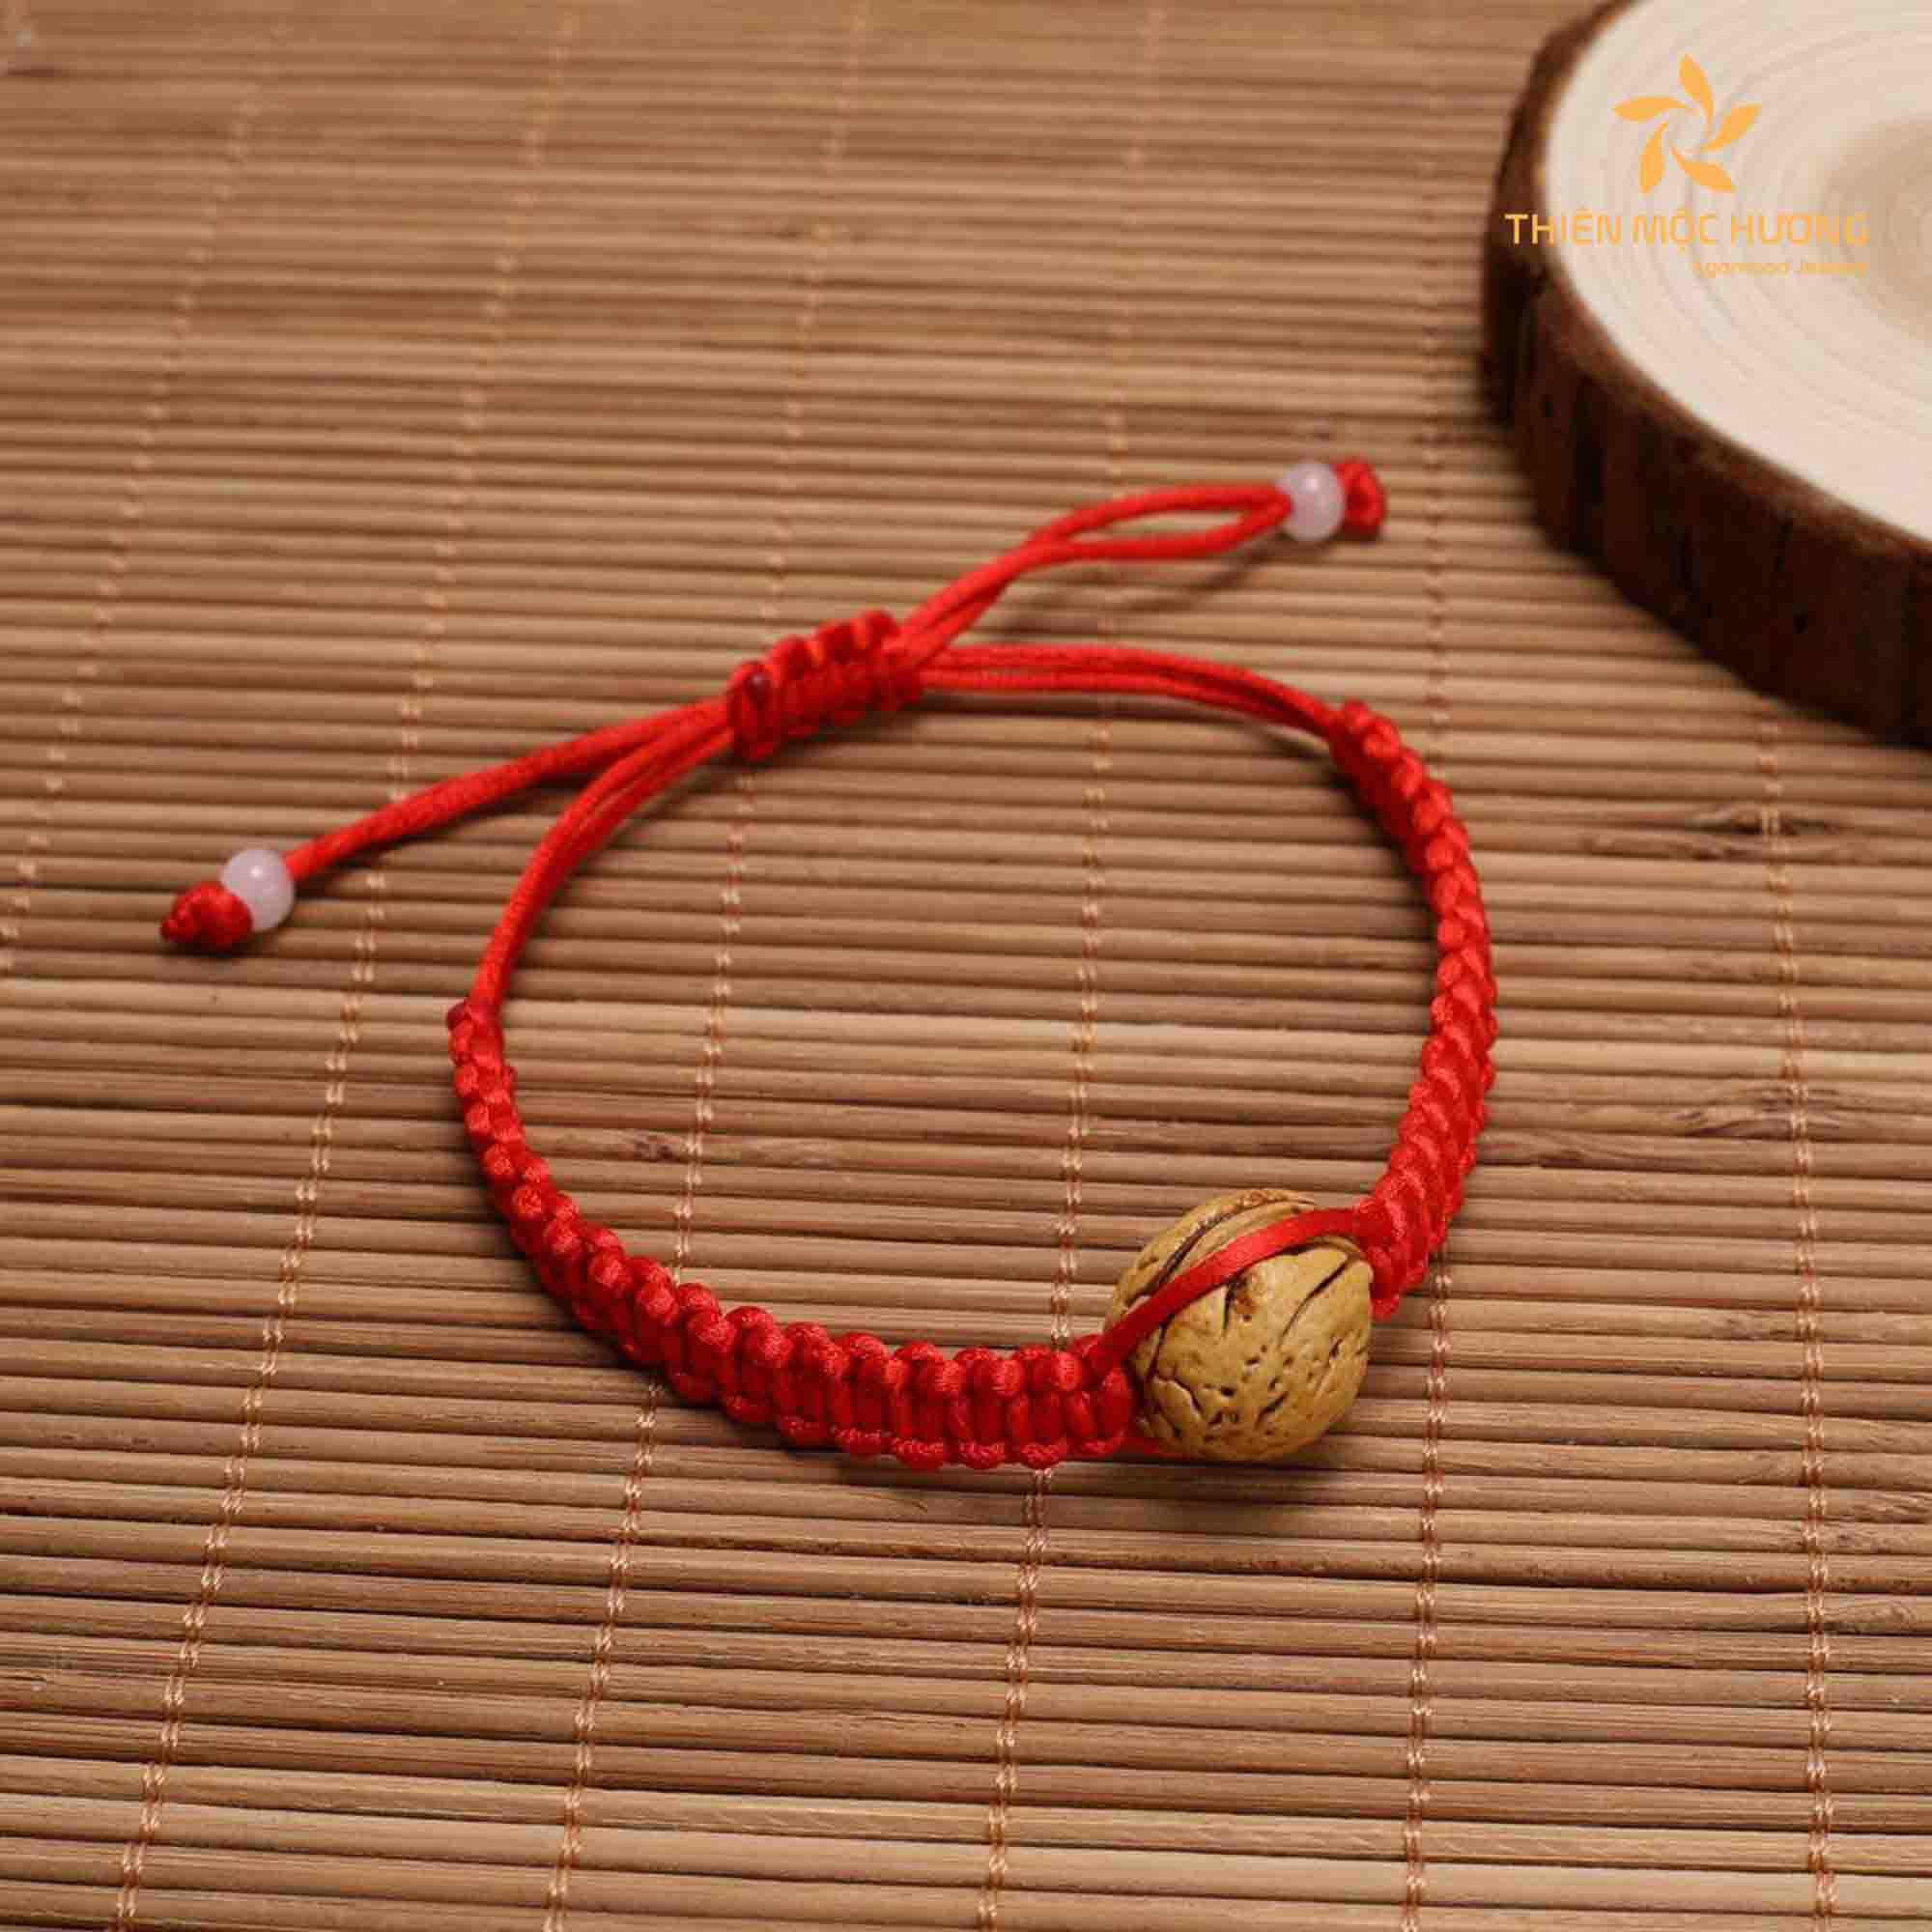 Feng shui expert advice on removing a red string bracelet